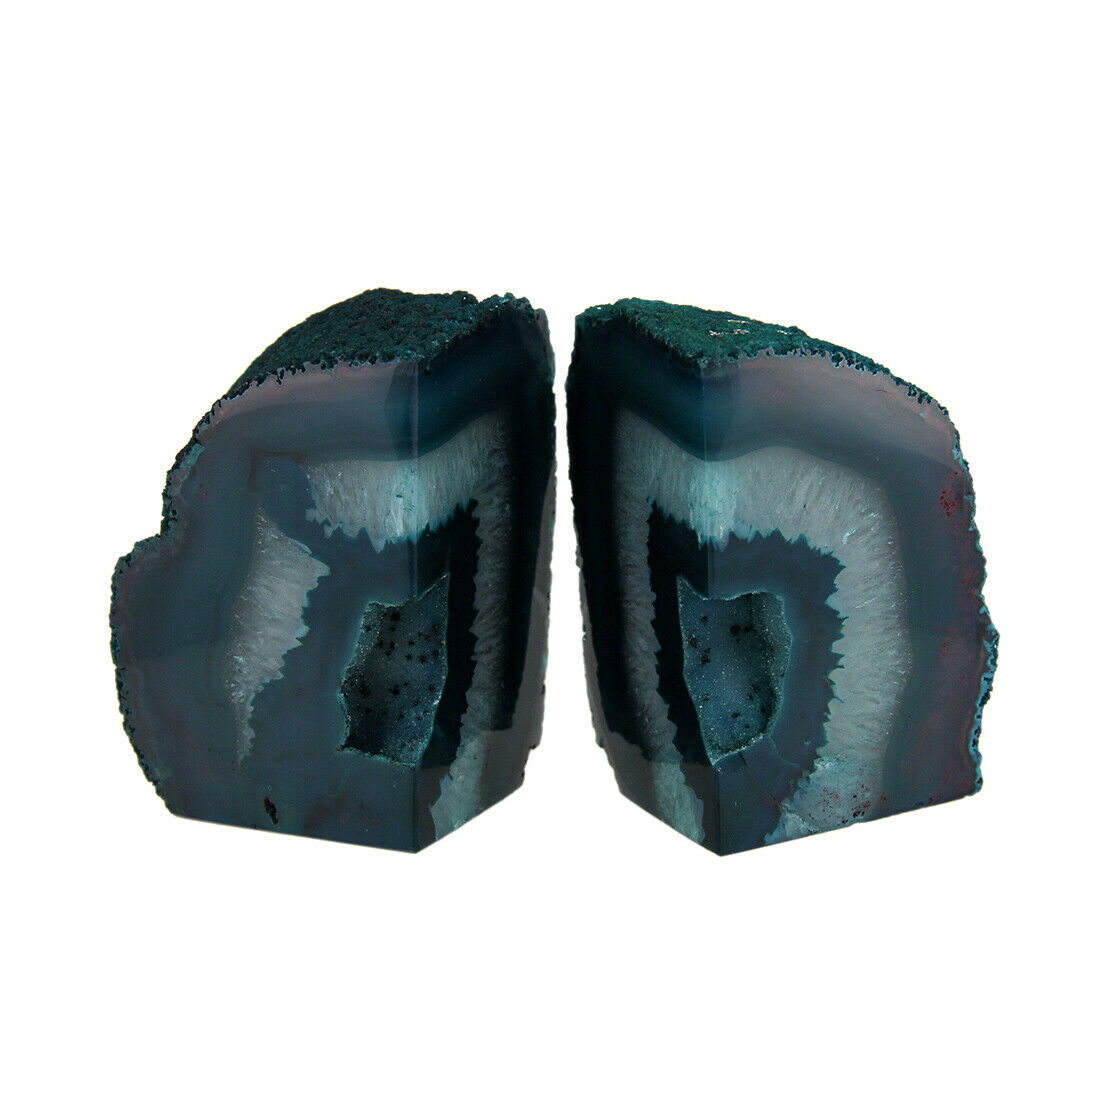 Zeckos Polished Green Brazilian Agate Geode Bookends 4-7 Pounds